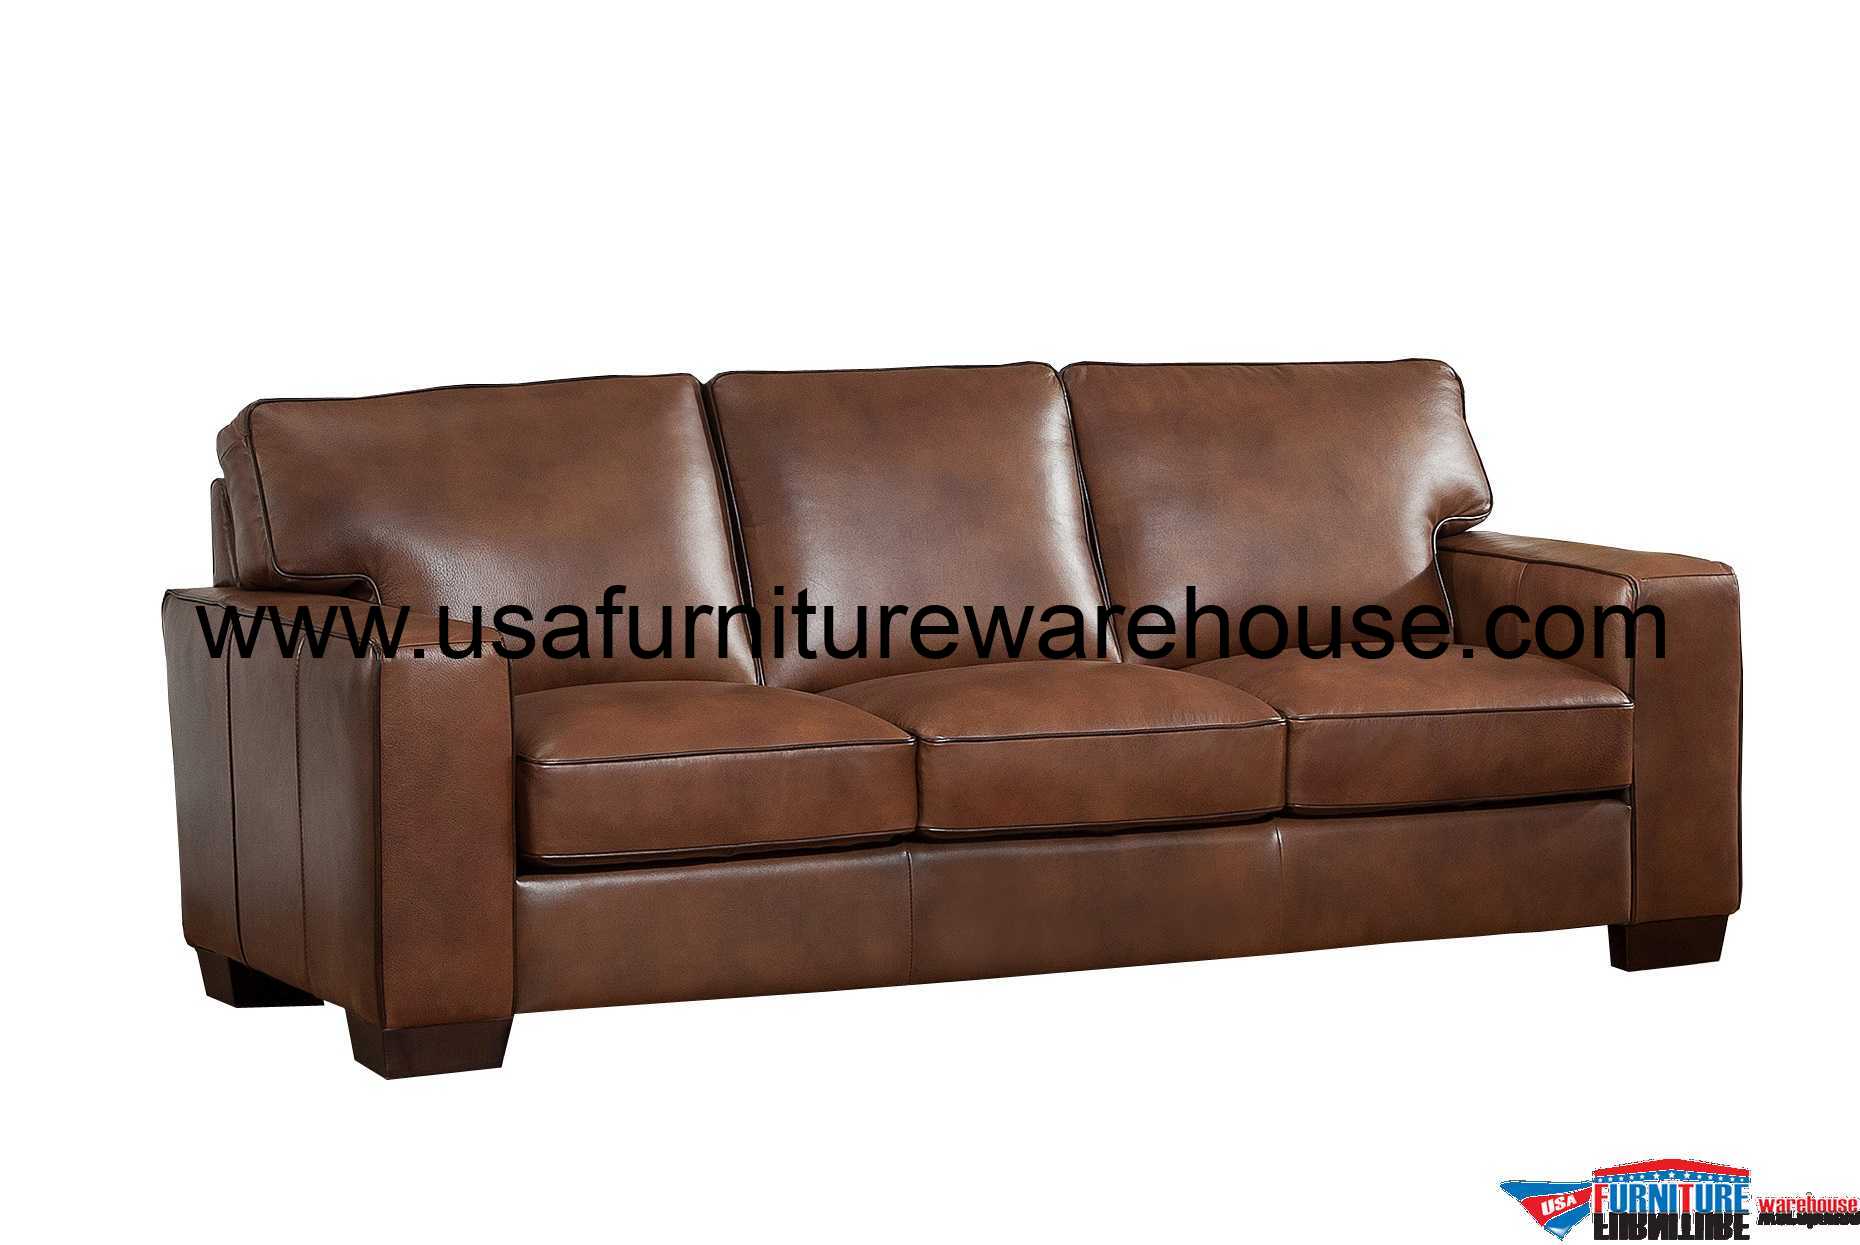 waltham top grain leather sofa